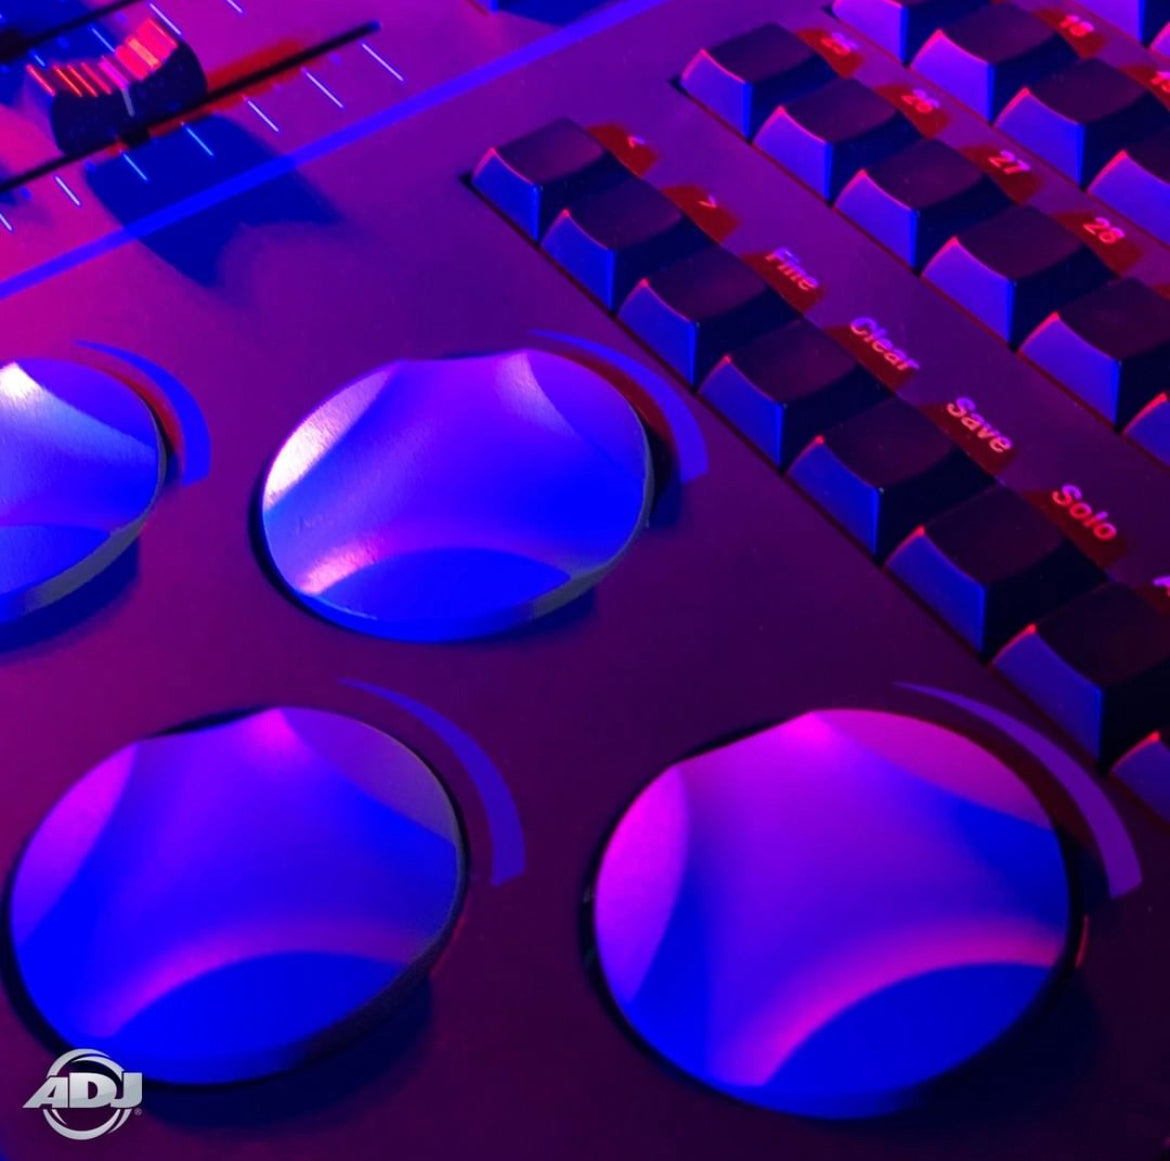 American DJ ADJ Link 4-universe DMX Controller [B-STOCK]